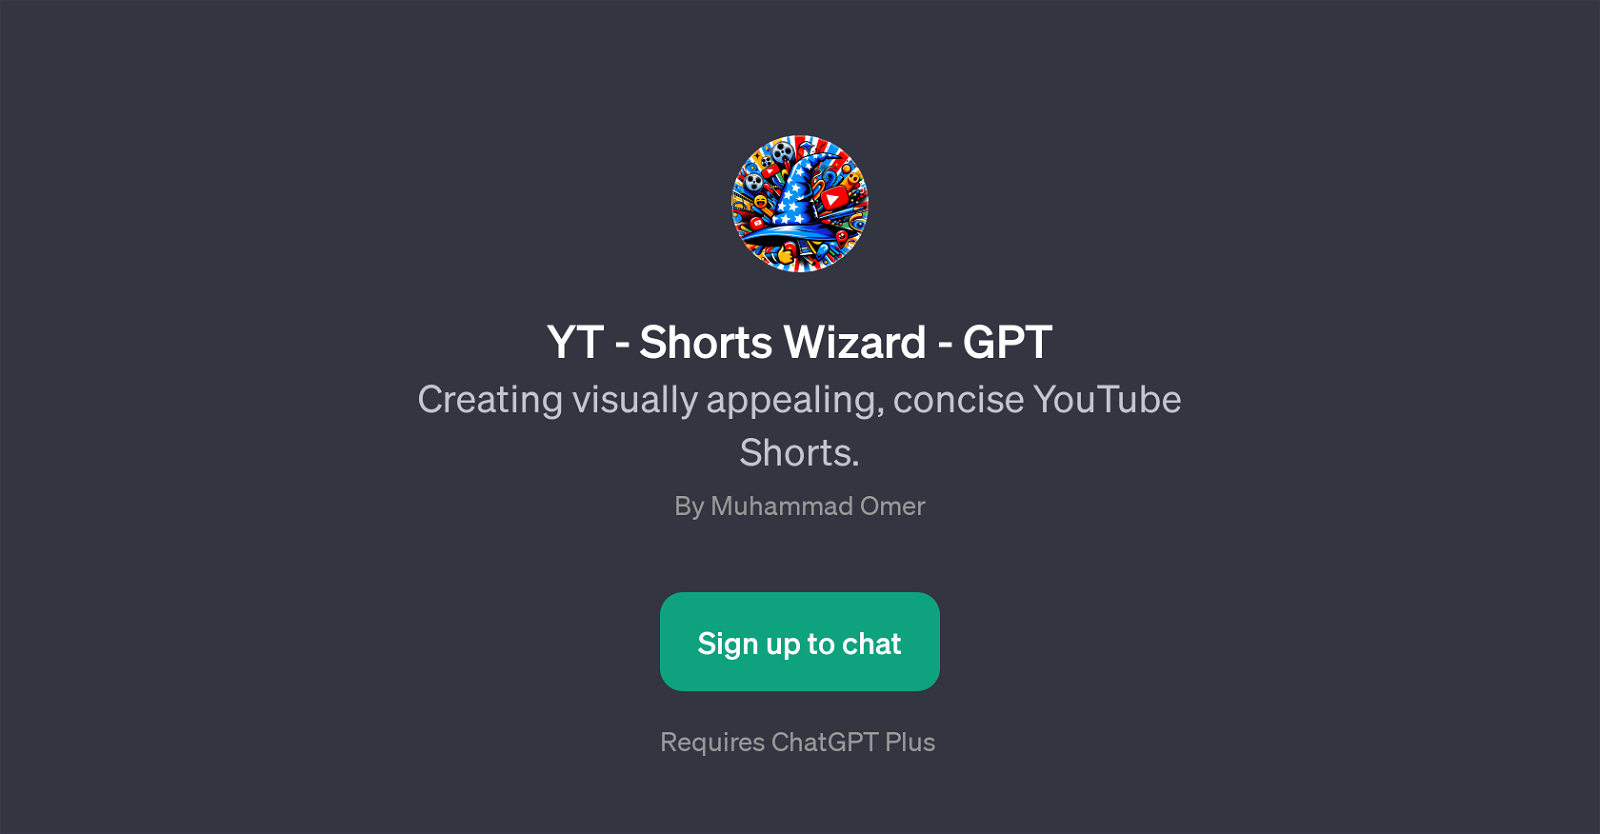 YT - Shorts Wizard - GPT website